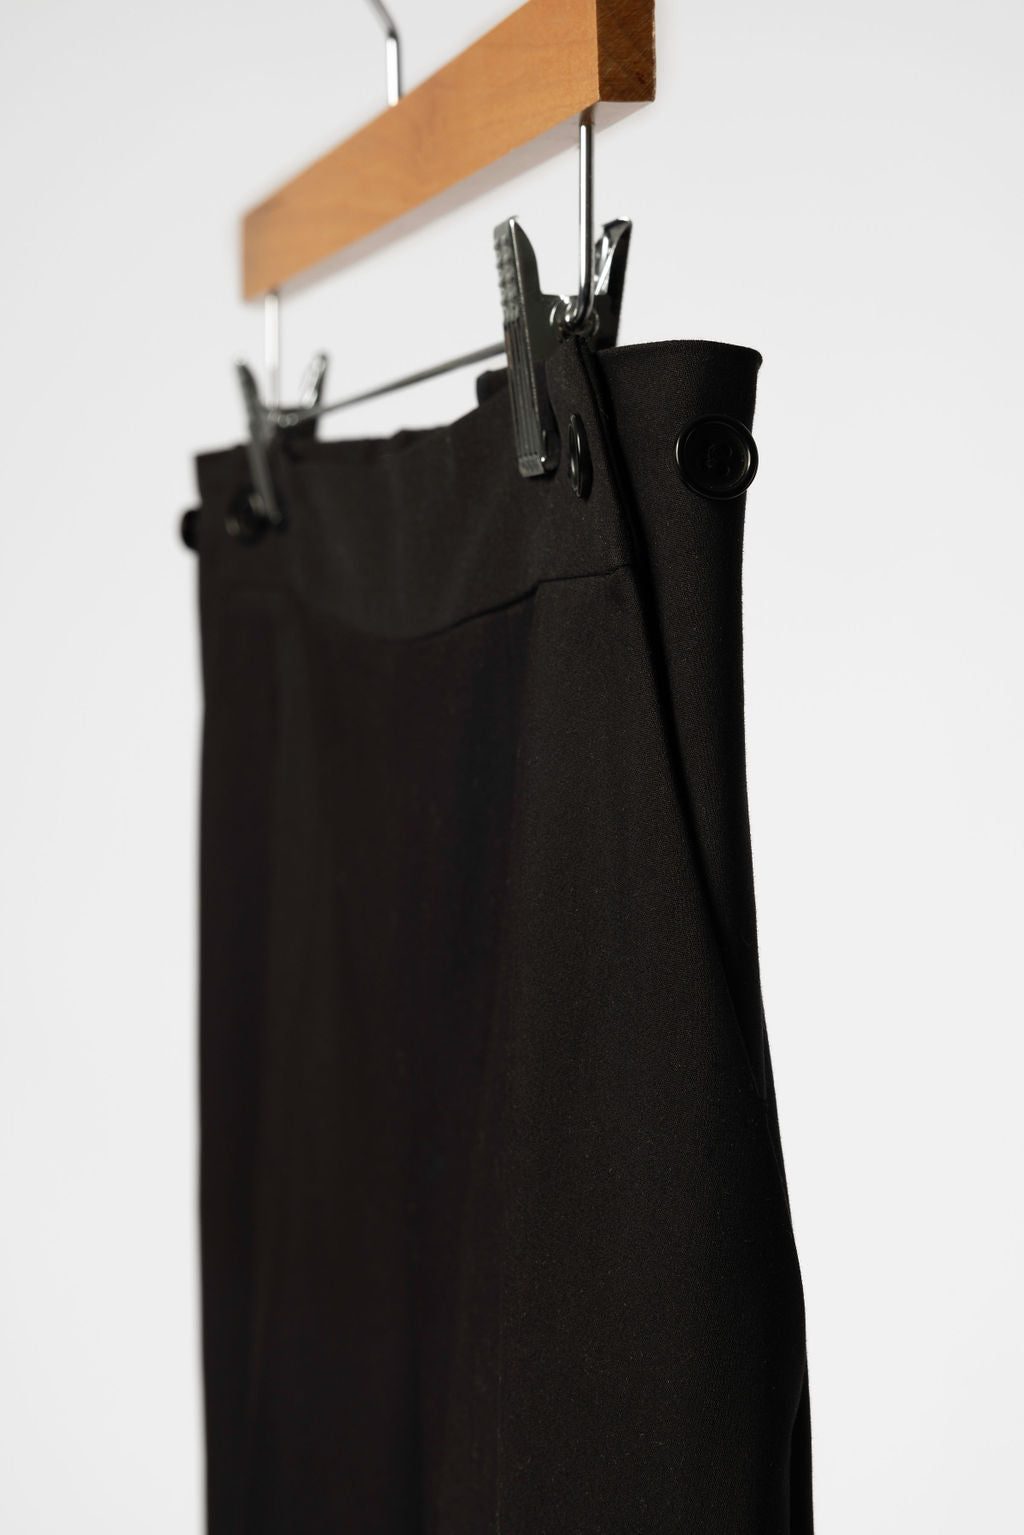 Minimalist Capsule Wardrobe High waisted, Wide Leg Trousers in Black on Hanger